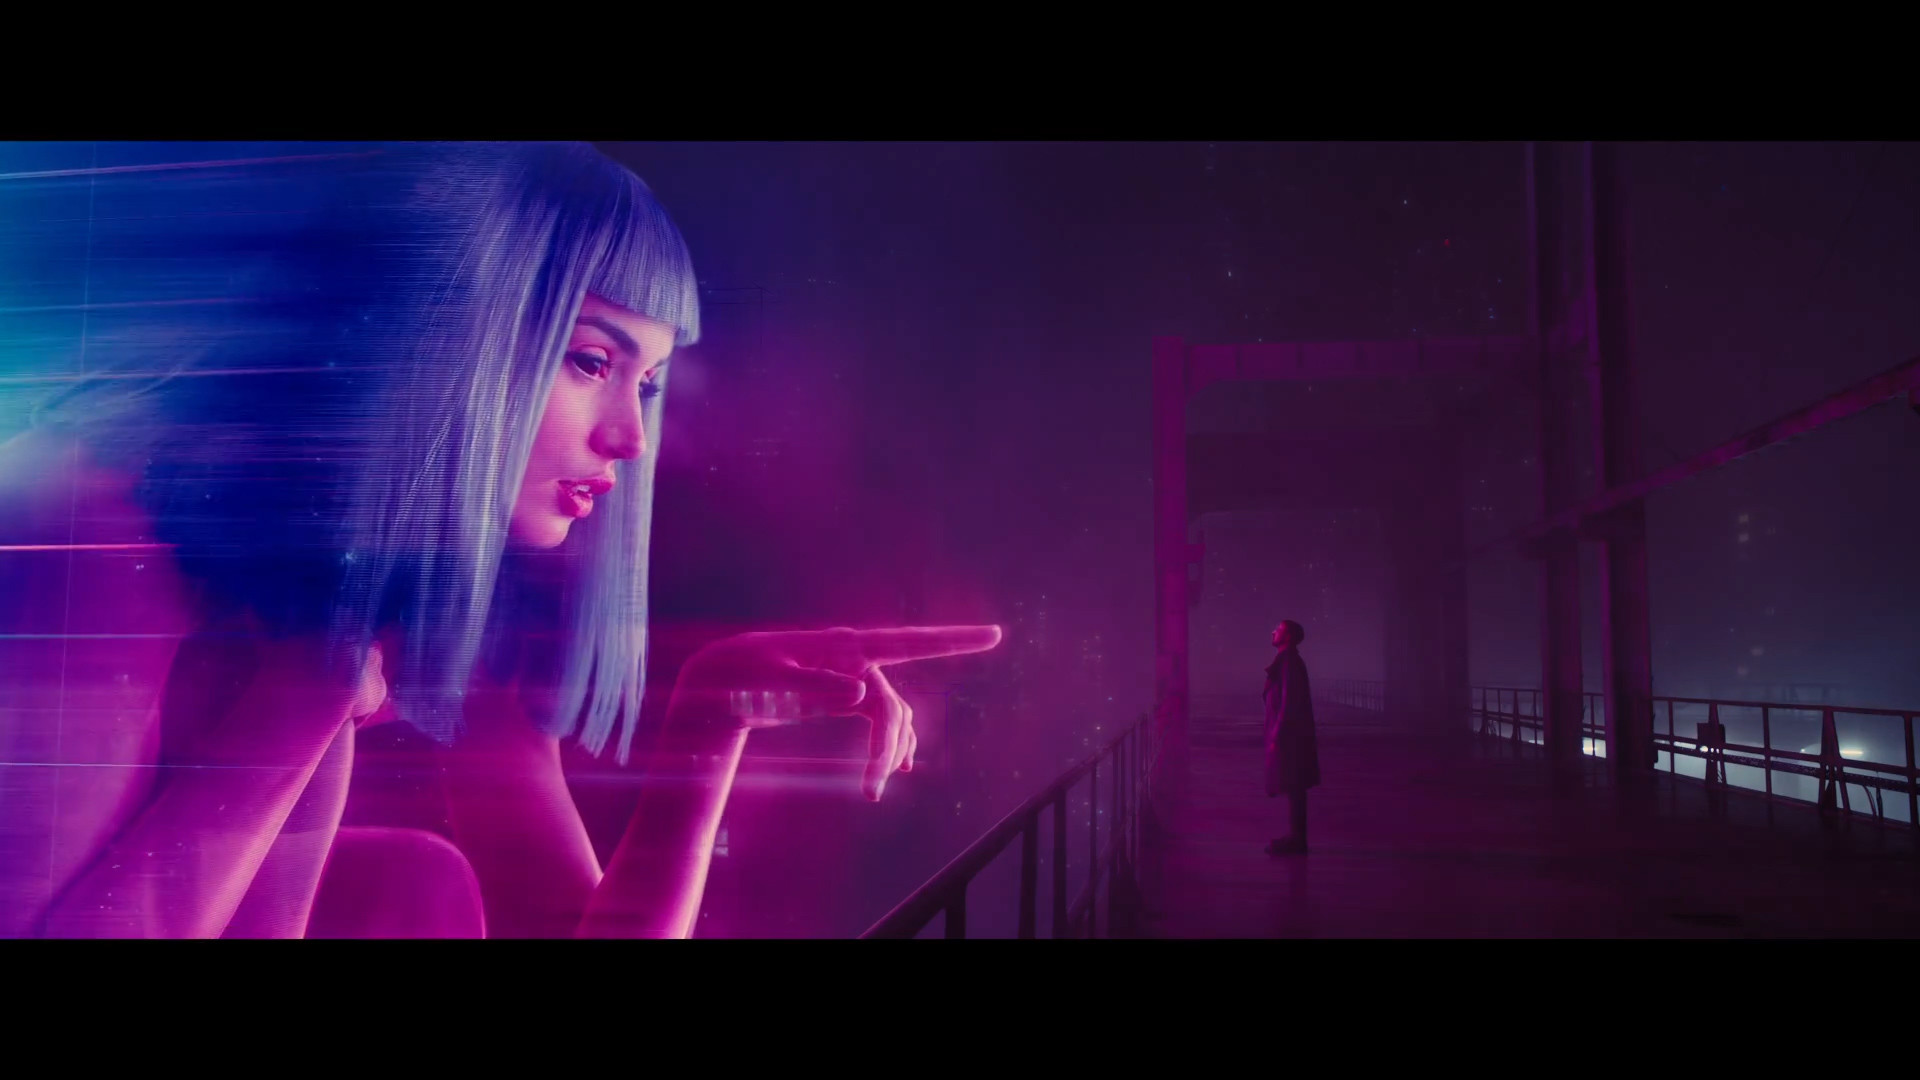 Hologram Blade Runner 2049 - HD Wallpaper 